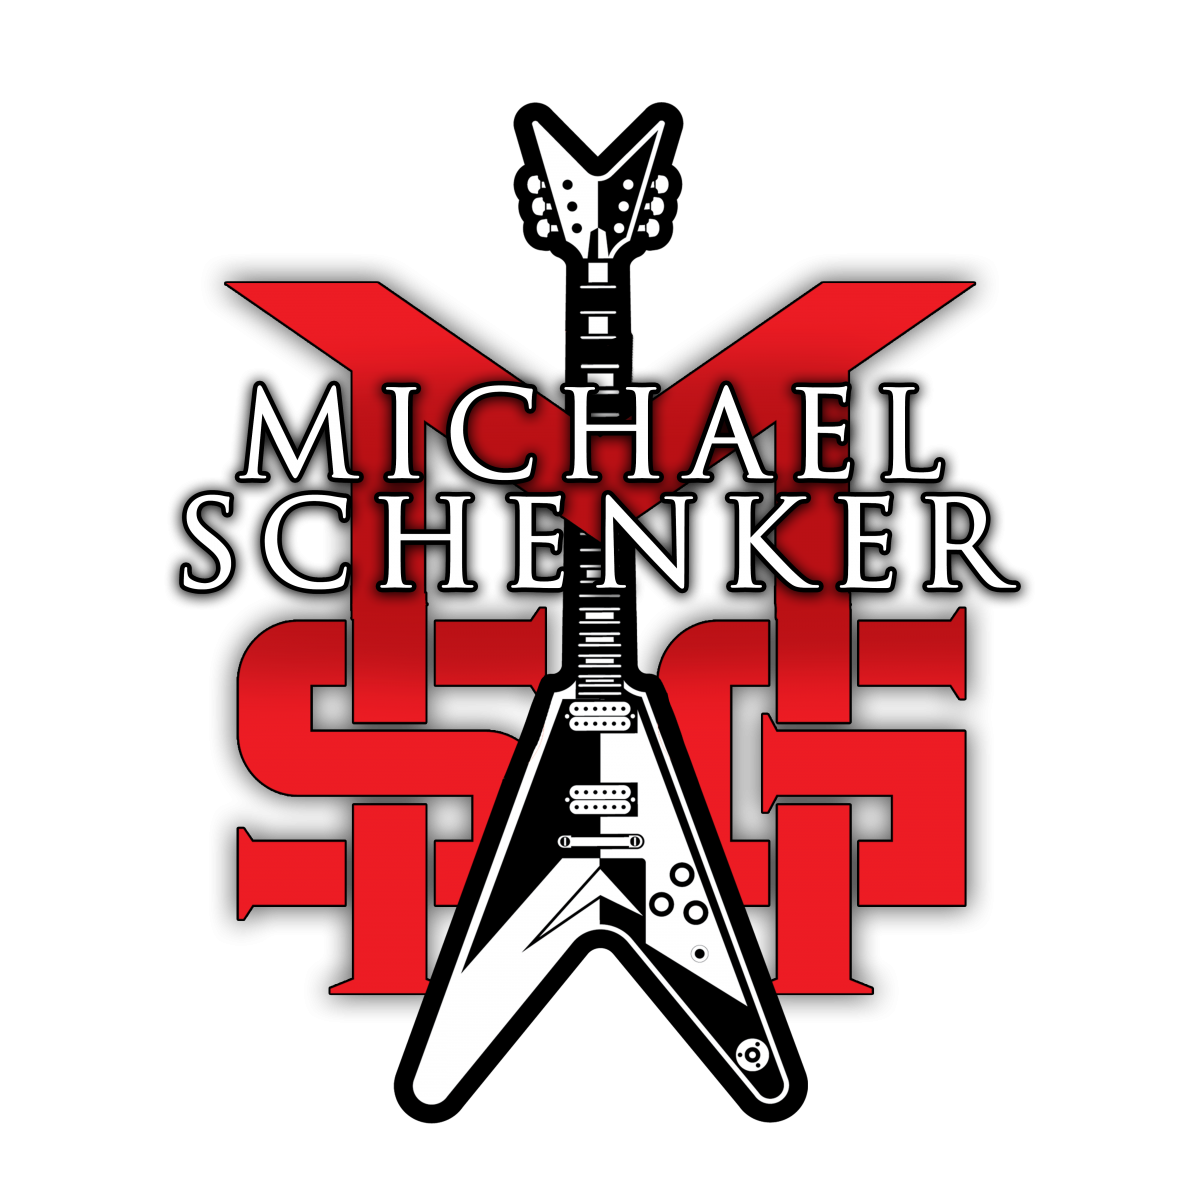 Michael Schenker Fest Logo